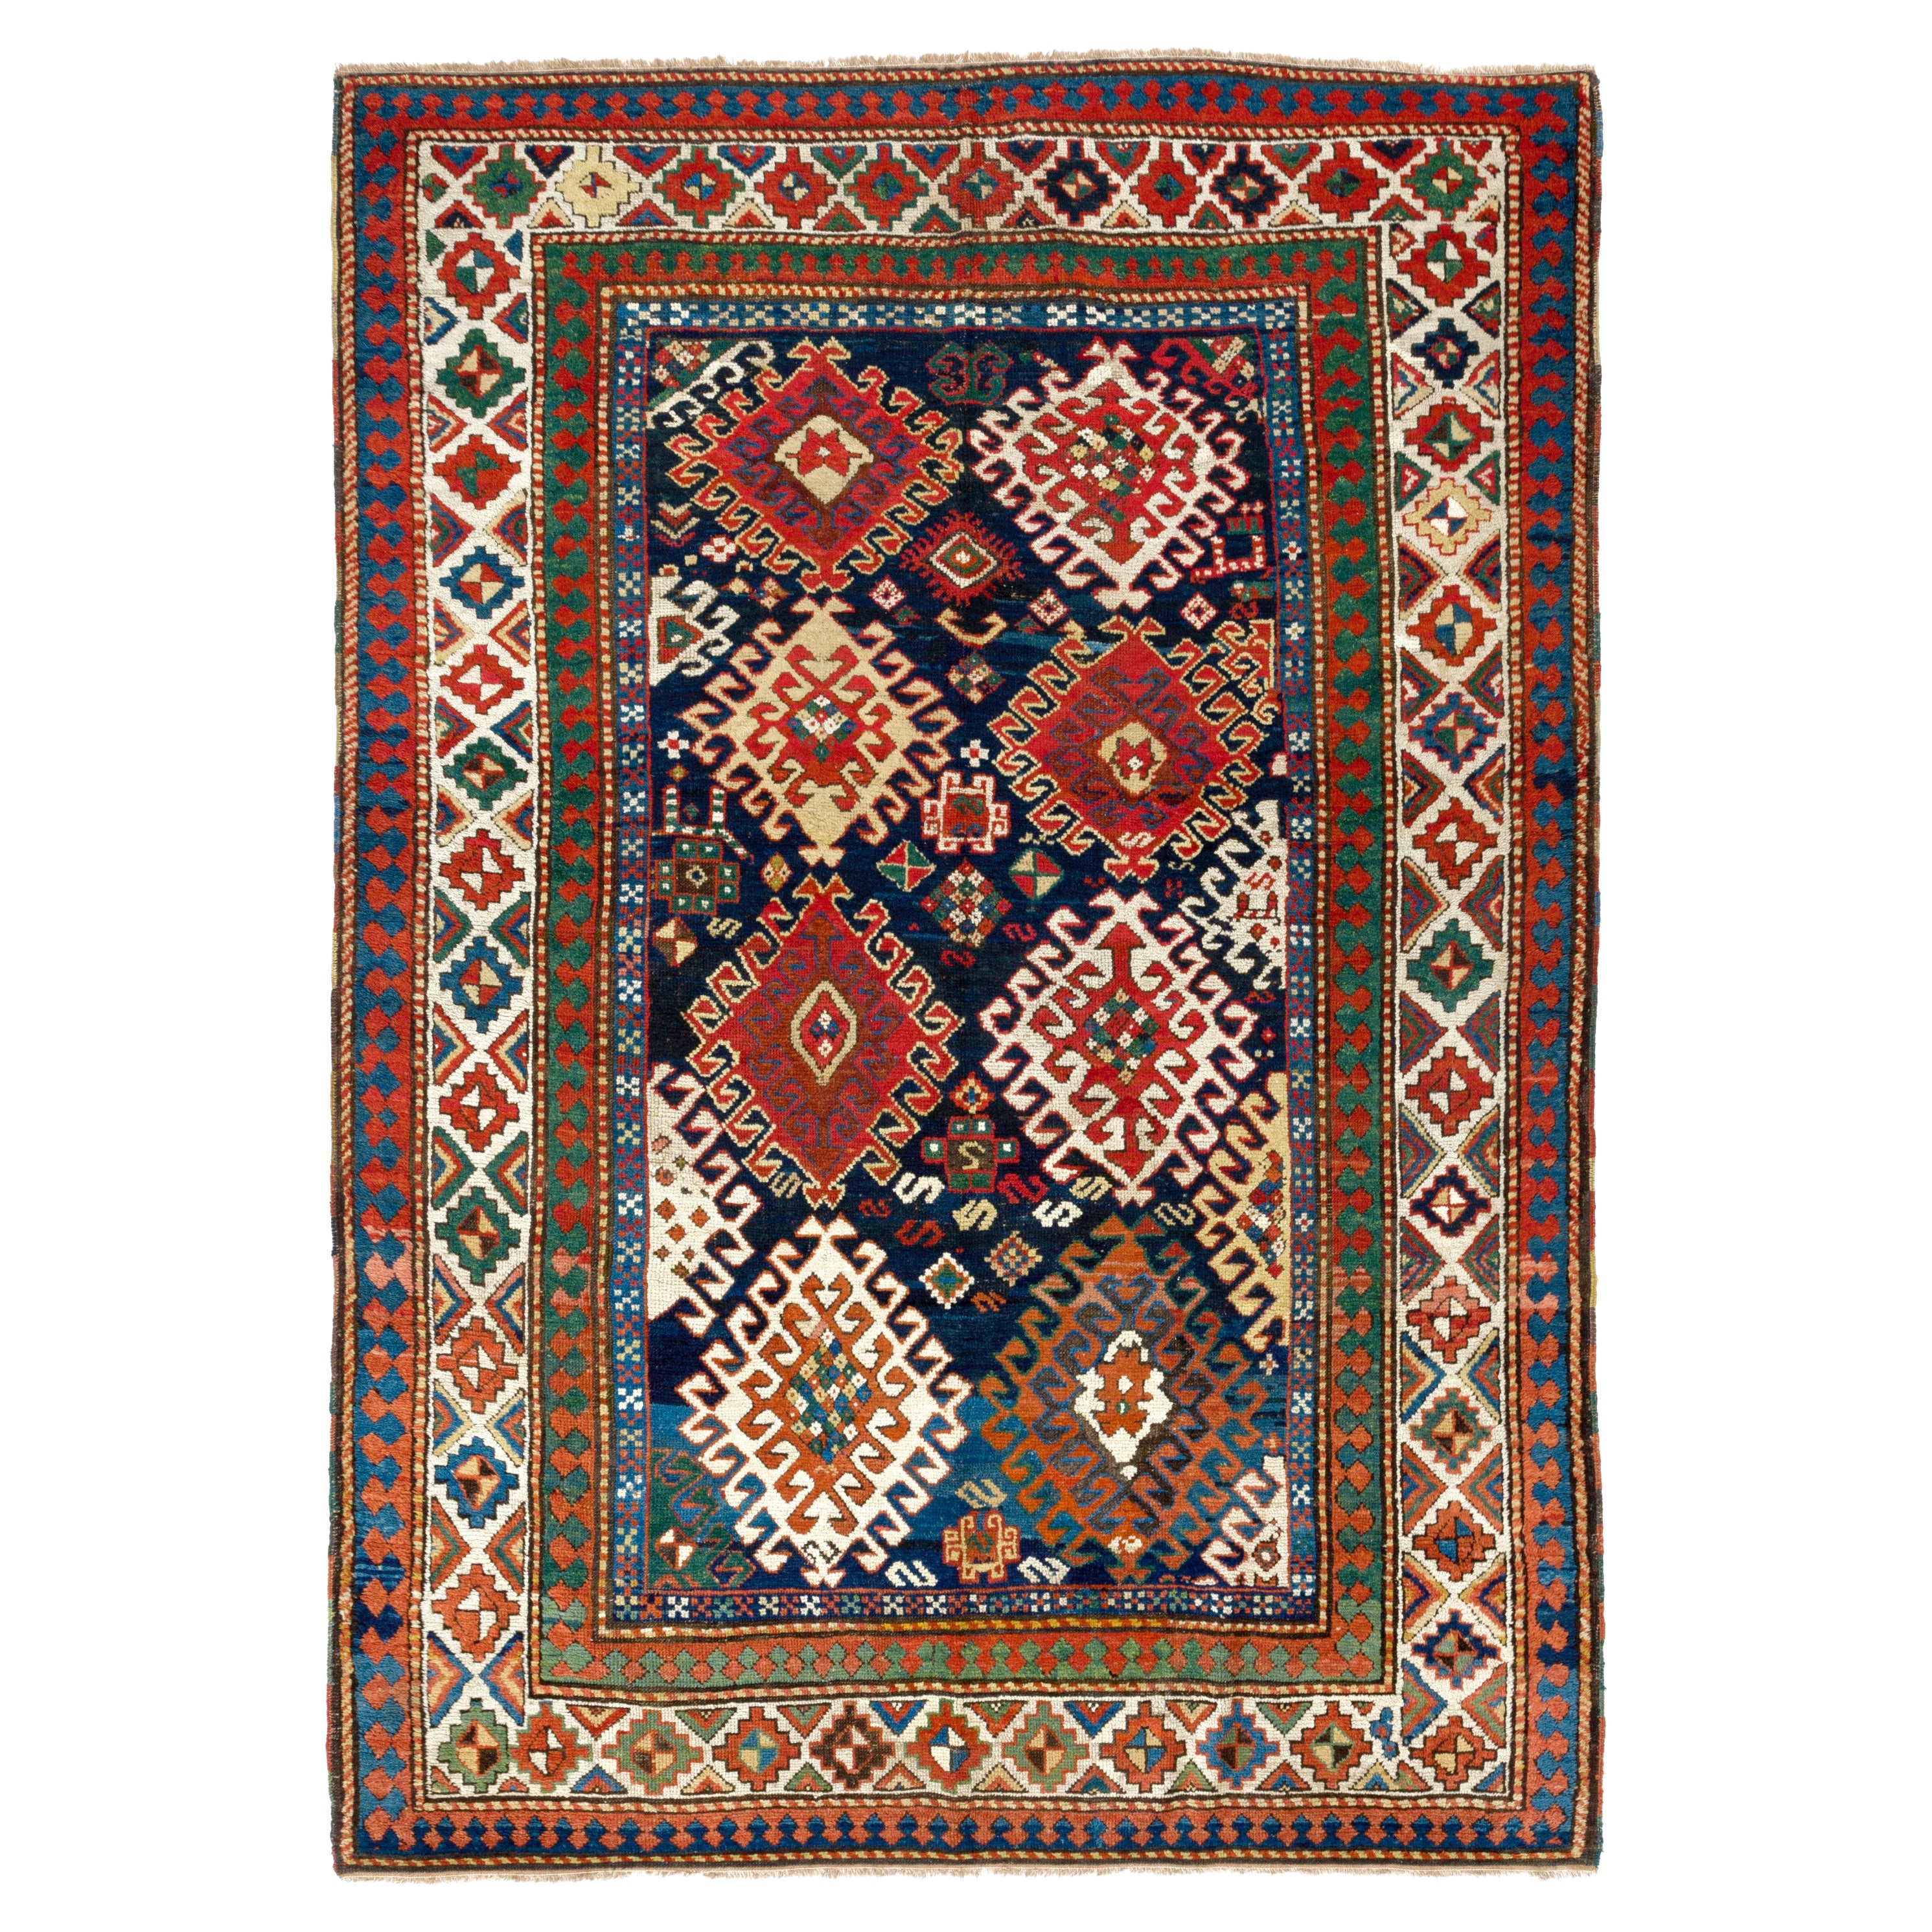 5'3" x 7'7" Antique Caucasian Bordjalou Kazak Rug, circa 1870